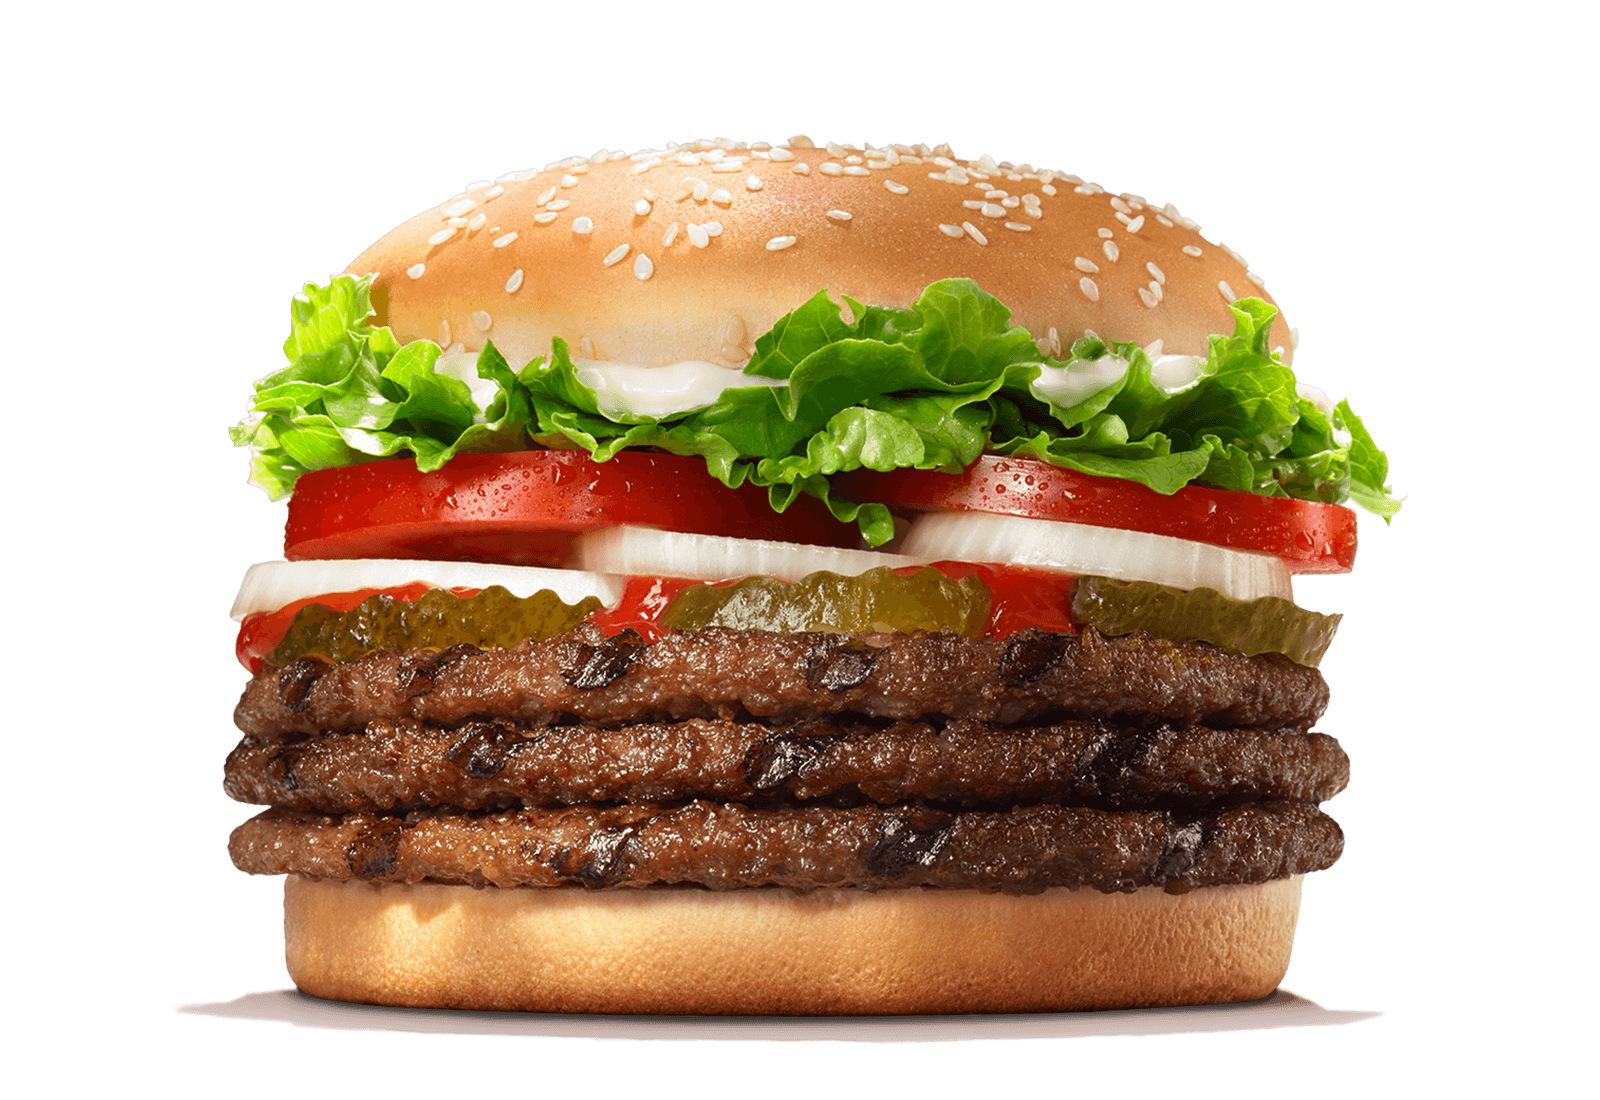 Download Logo Burger Restaurant Hamburger King Downlo - vrogue.co